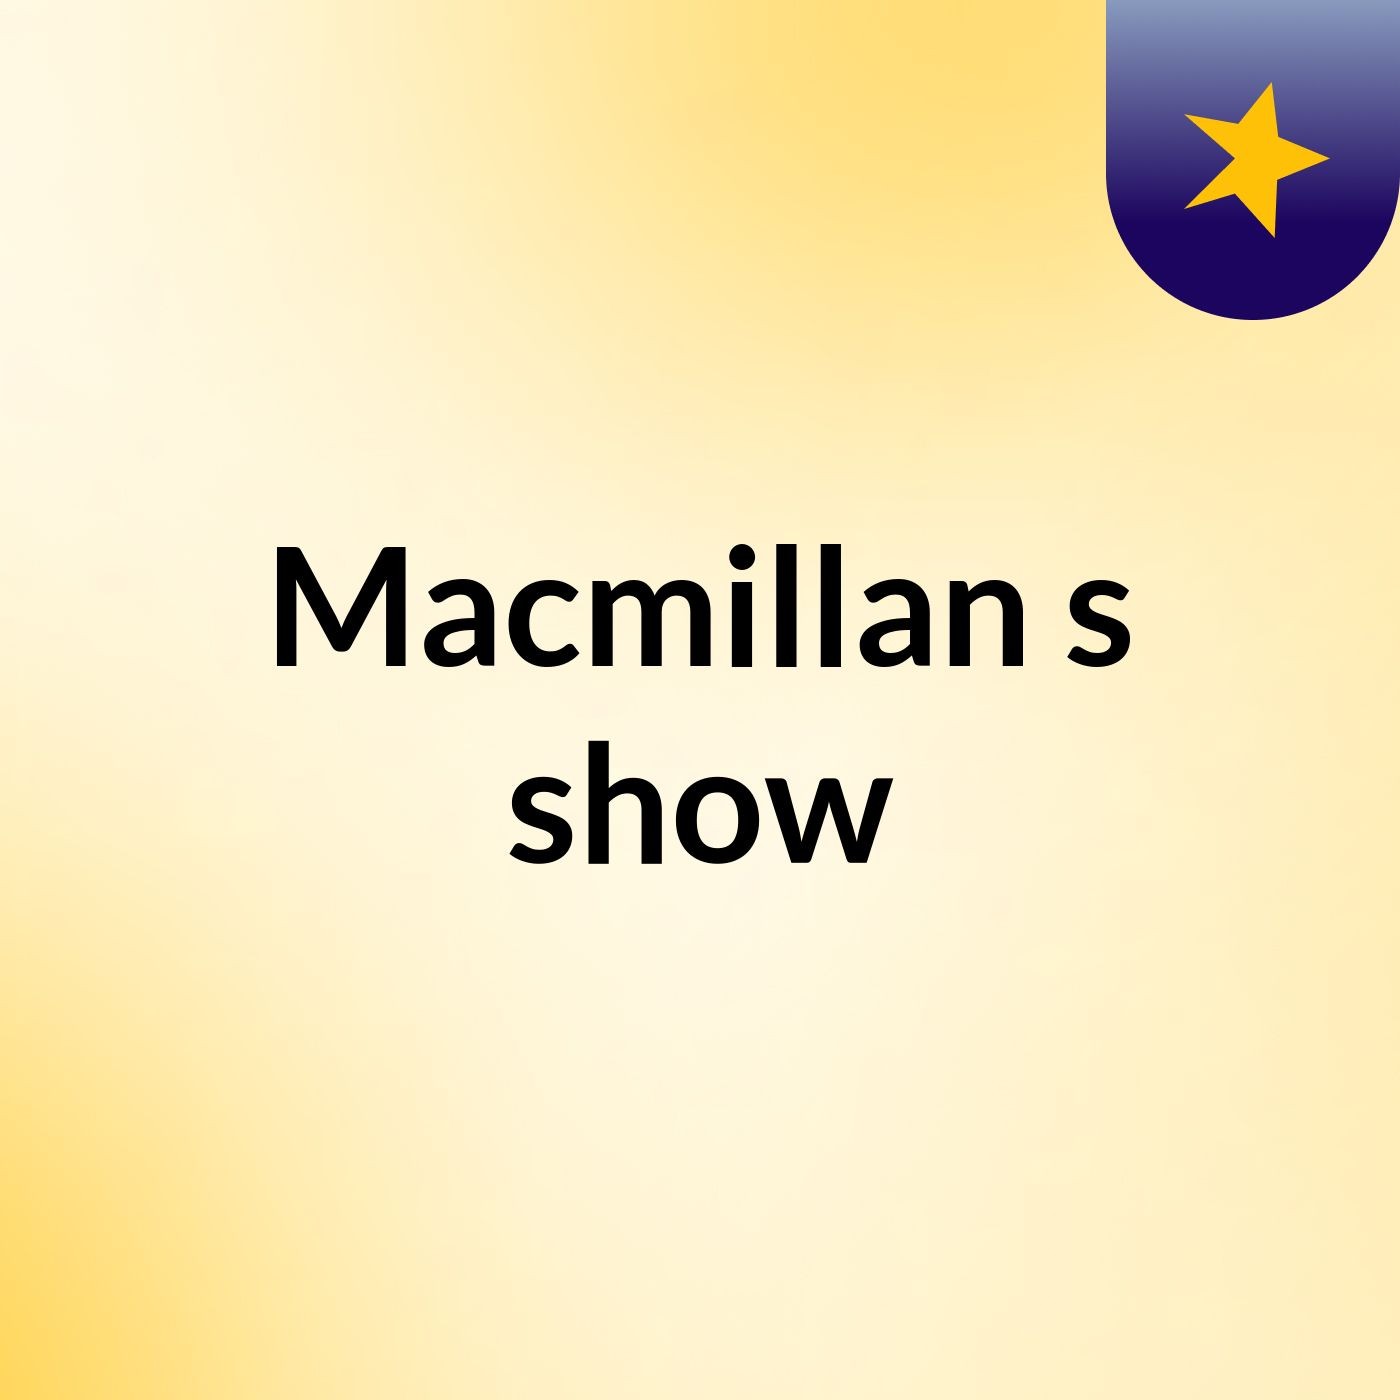 Macmillan's show